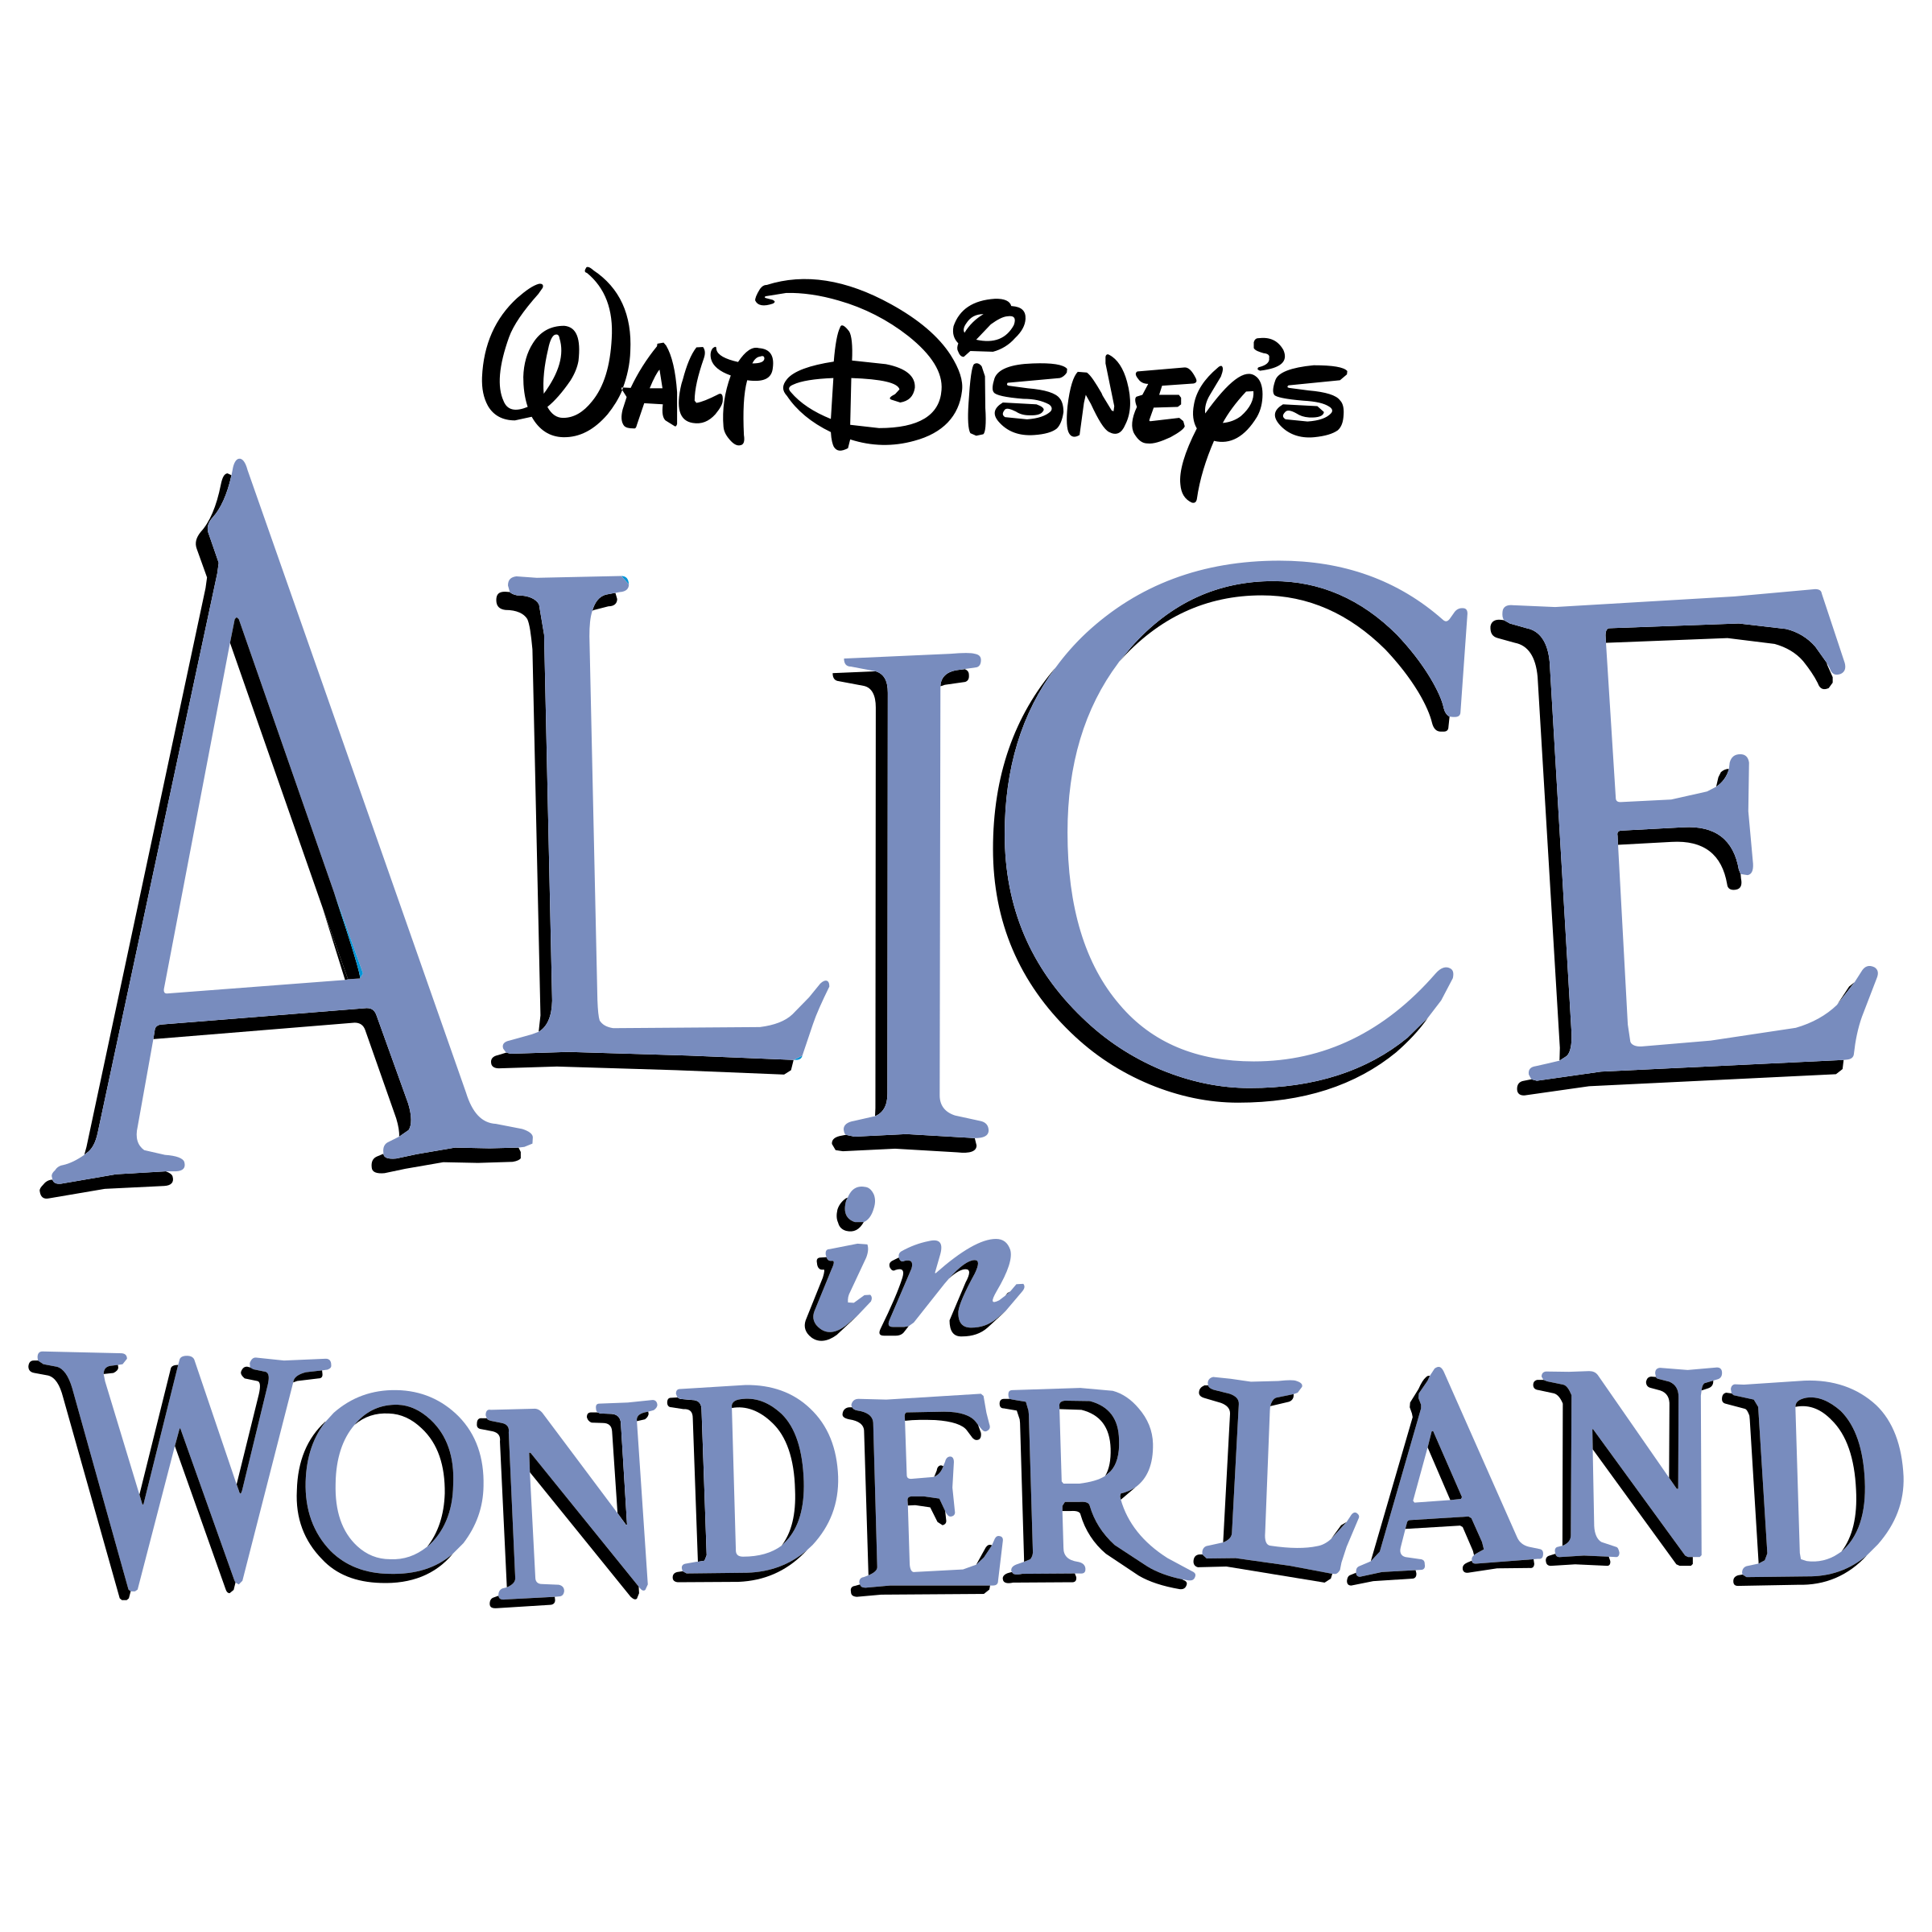 Wonderland Logo Picture Alice In PNG Image